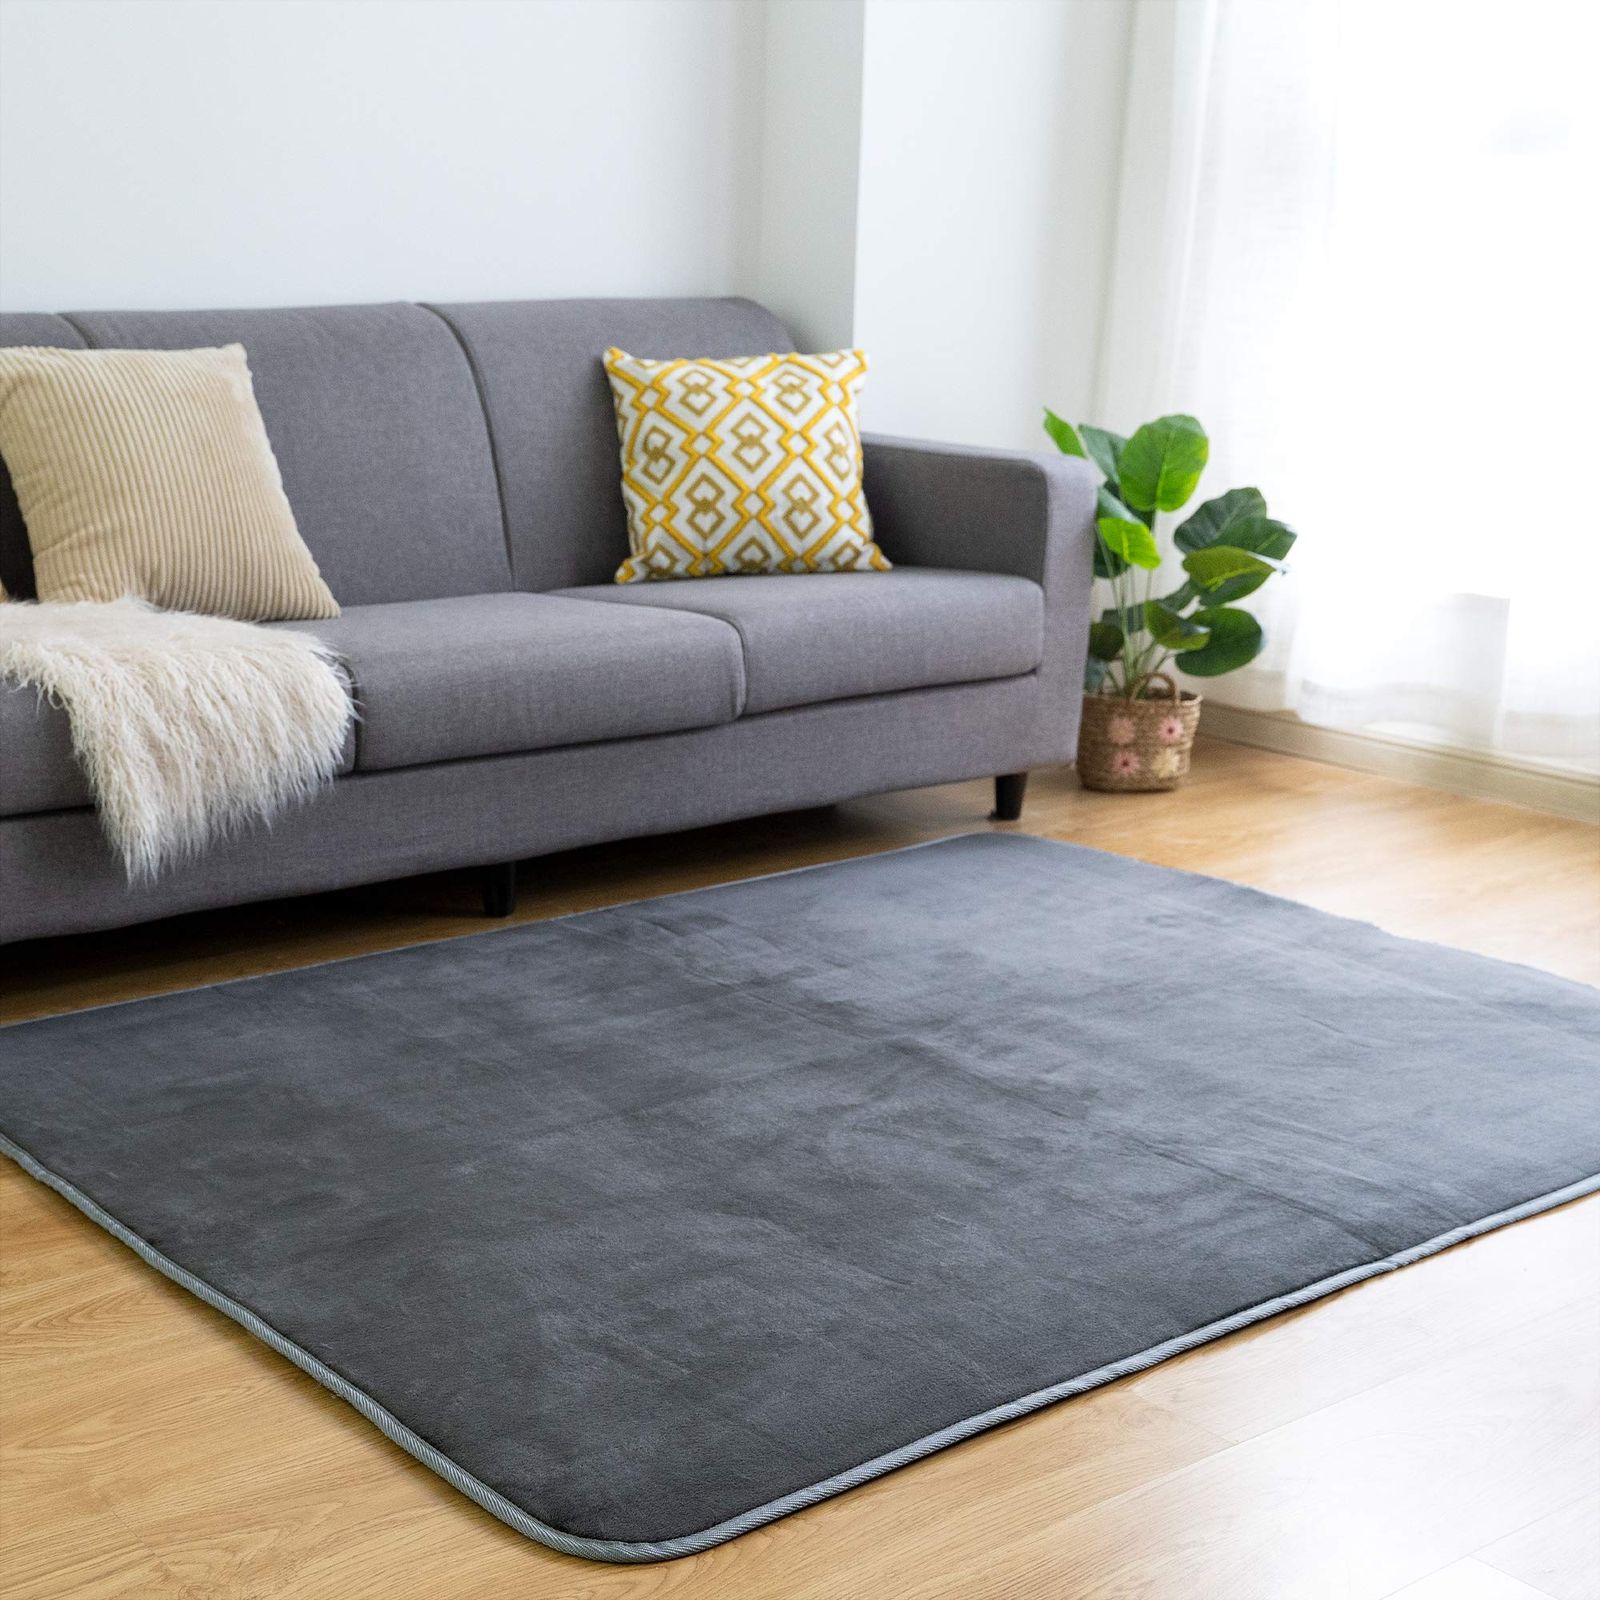 VK Living カーペット ラグ ラグマット 絨毯 135×185cm(約1.5畳) 洗える 滑り止め付 防ダニ 抗菌 防臭 1年中使えるタイプ 床暖房 ホットカーペット対応 ふわっと手触り 優しいフランネルラグ 無地・ダークグレー